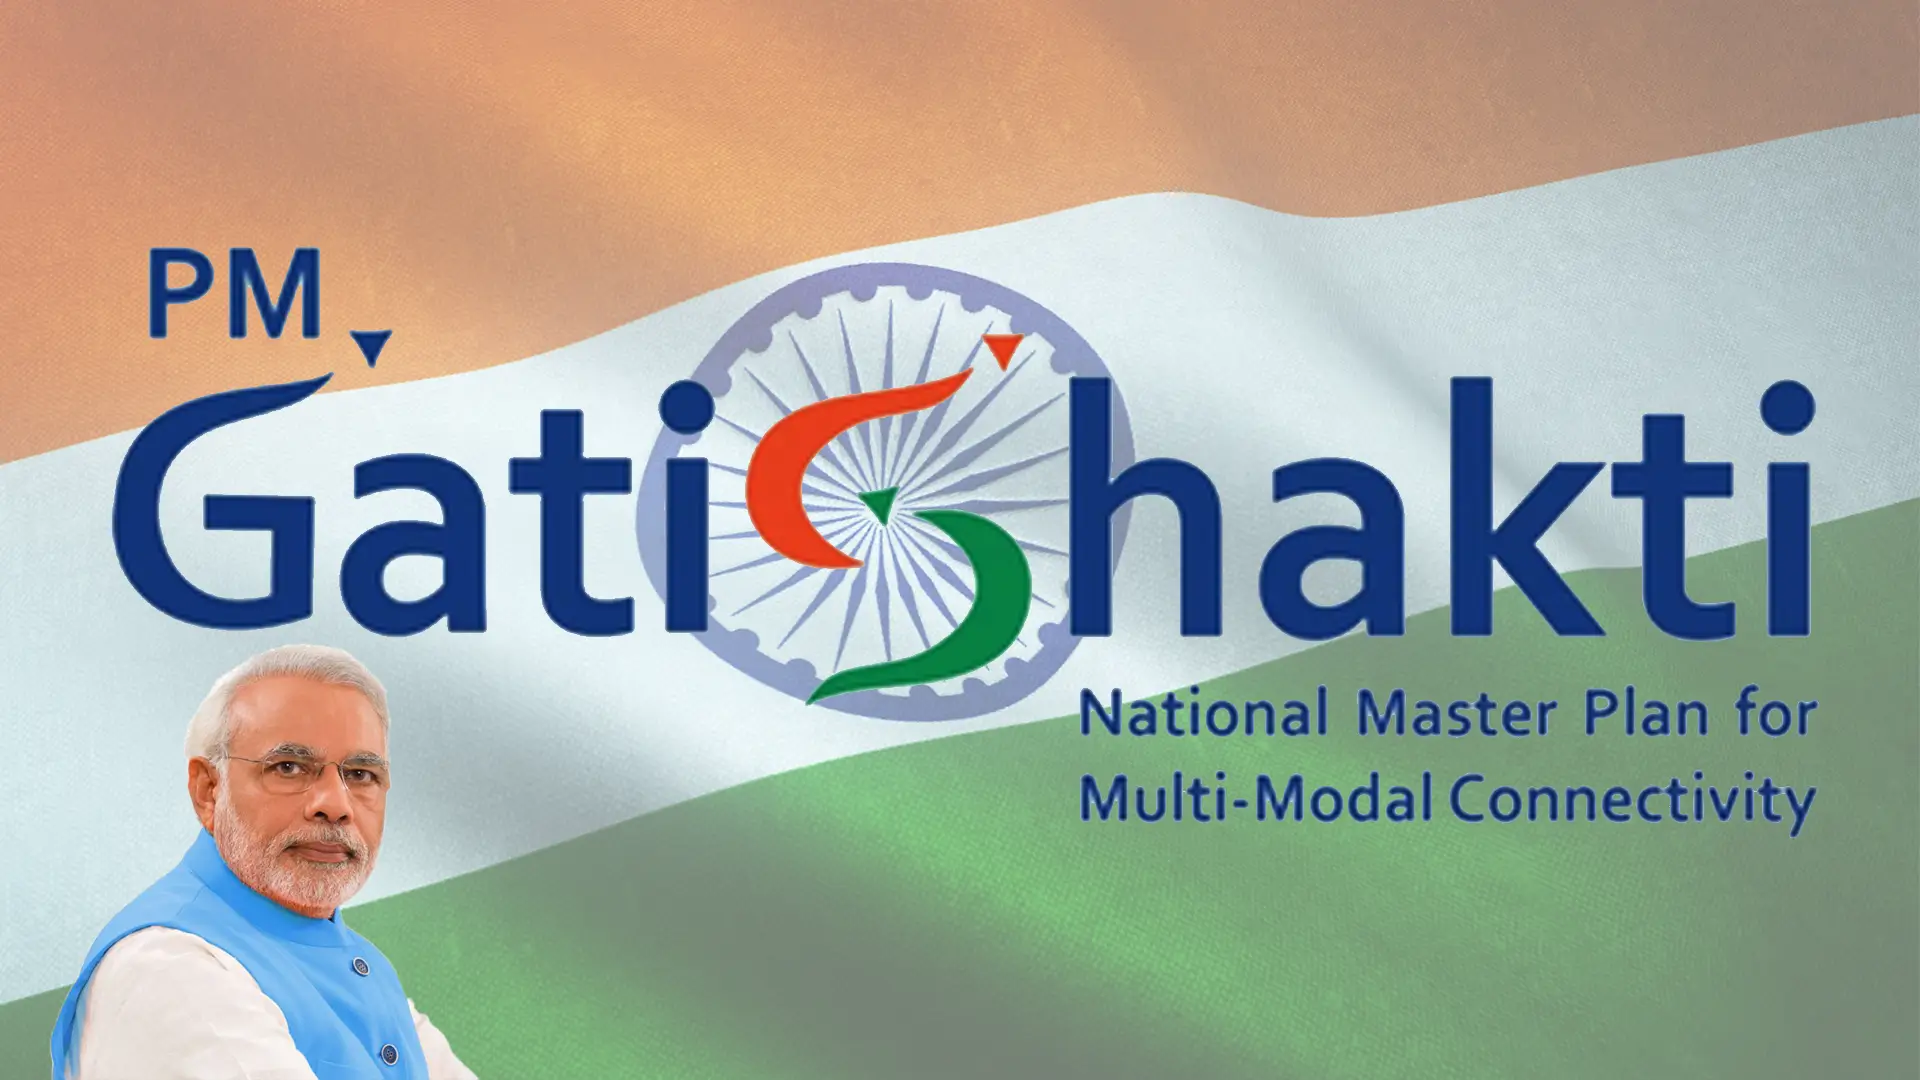 PM Gati Shakti: Multi-Modal Connectivity Plan for India